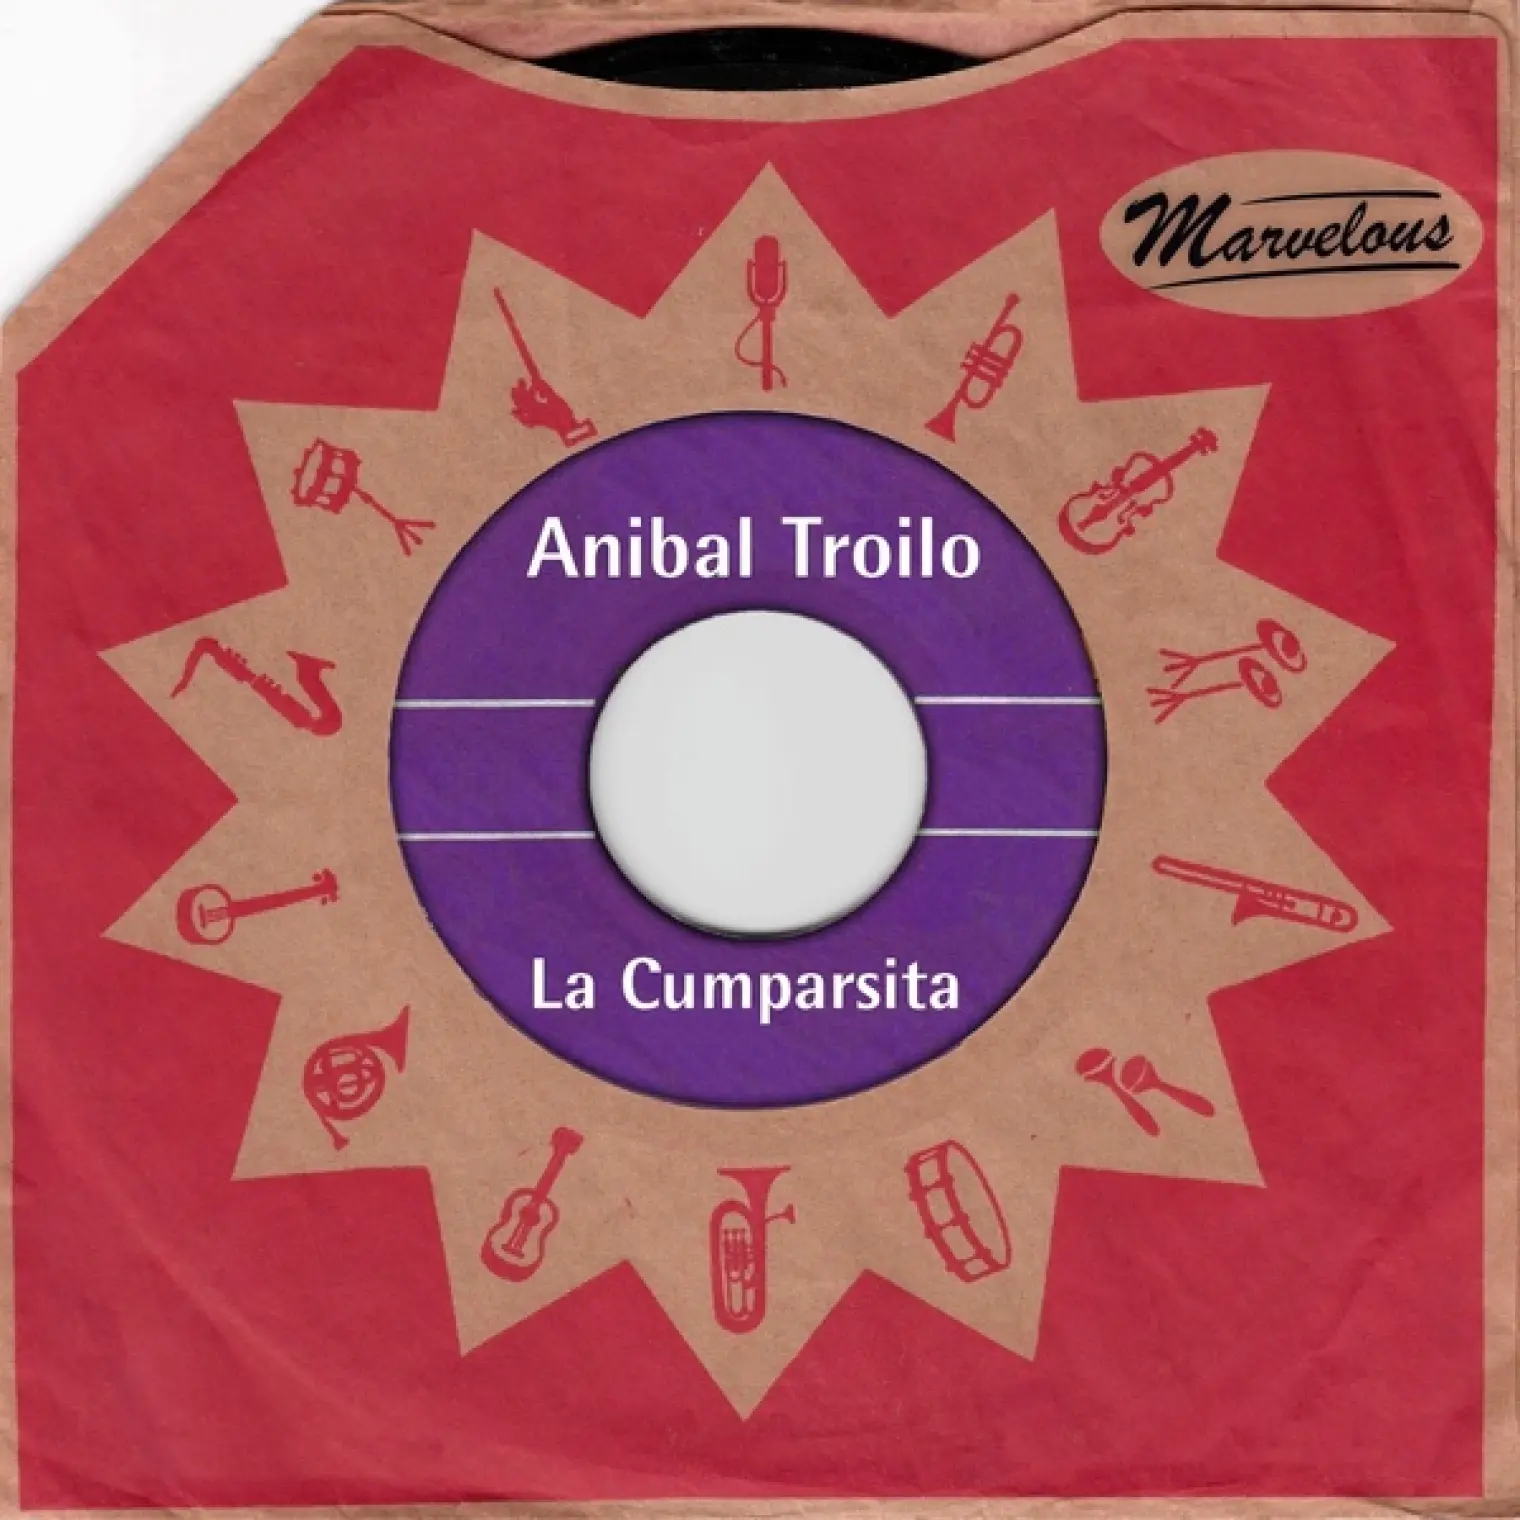 La Cumparsita (Marvelous) -  Anibal Troilo 